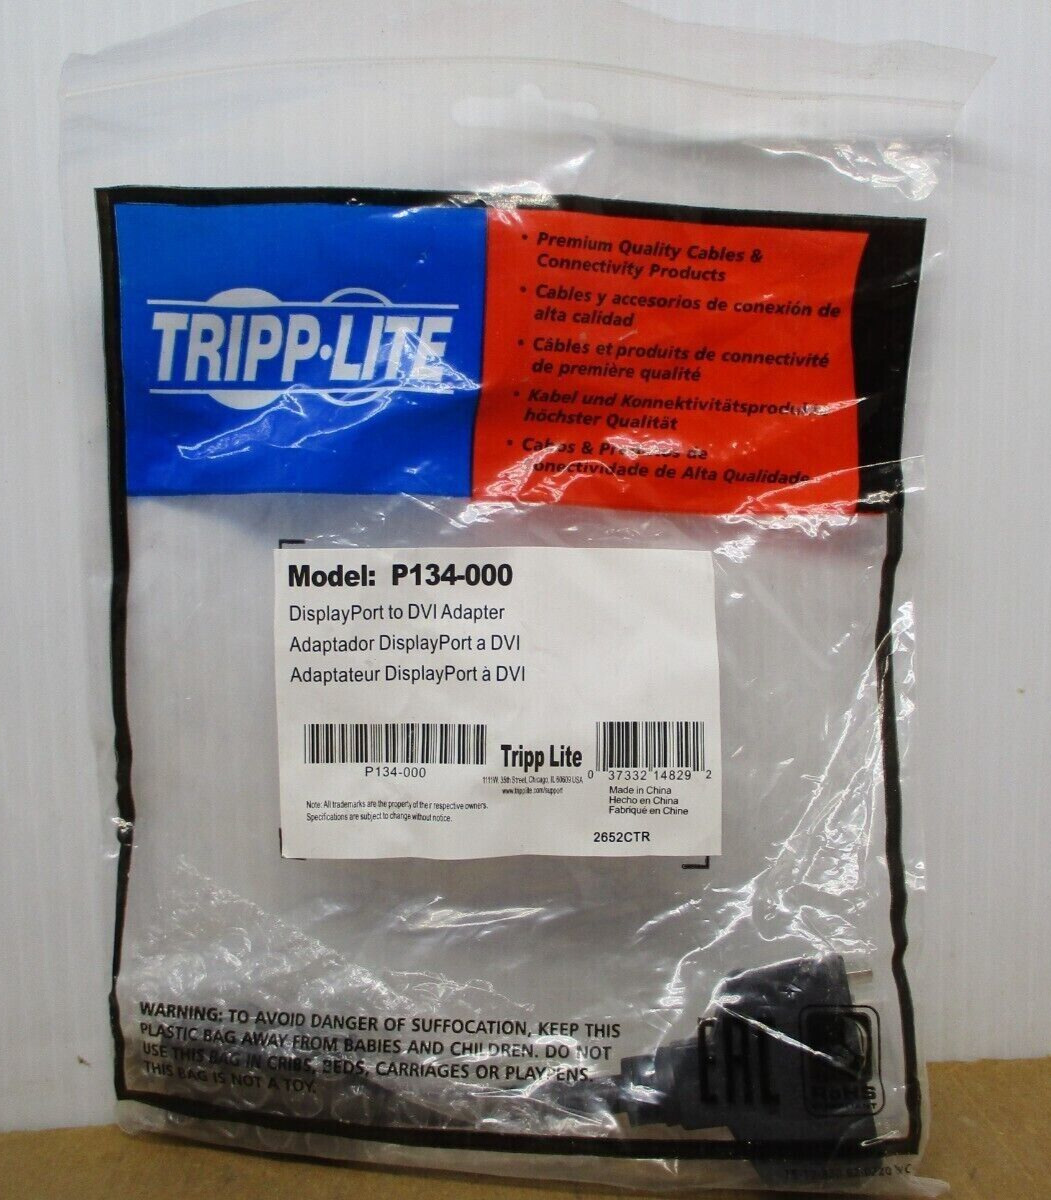 TRIP-LITE DisplayPort to DVI Adapter Model: P134-000